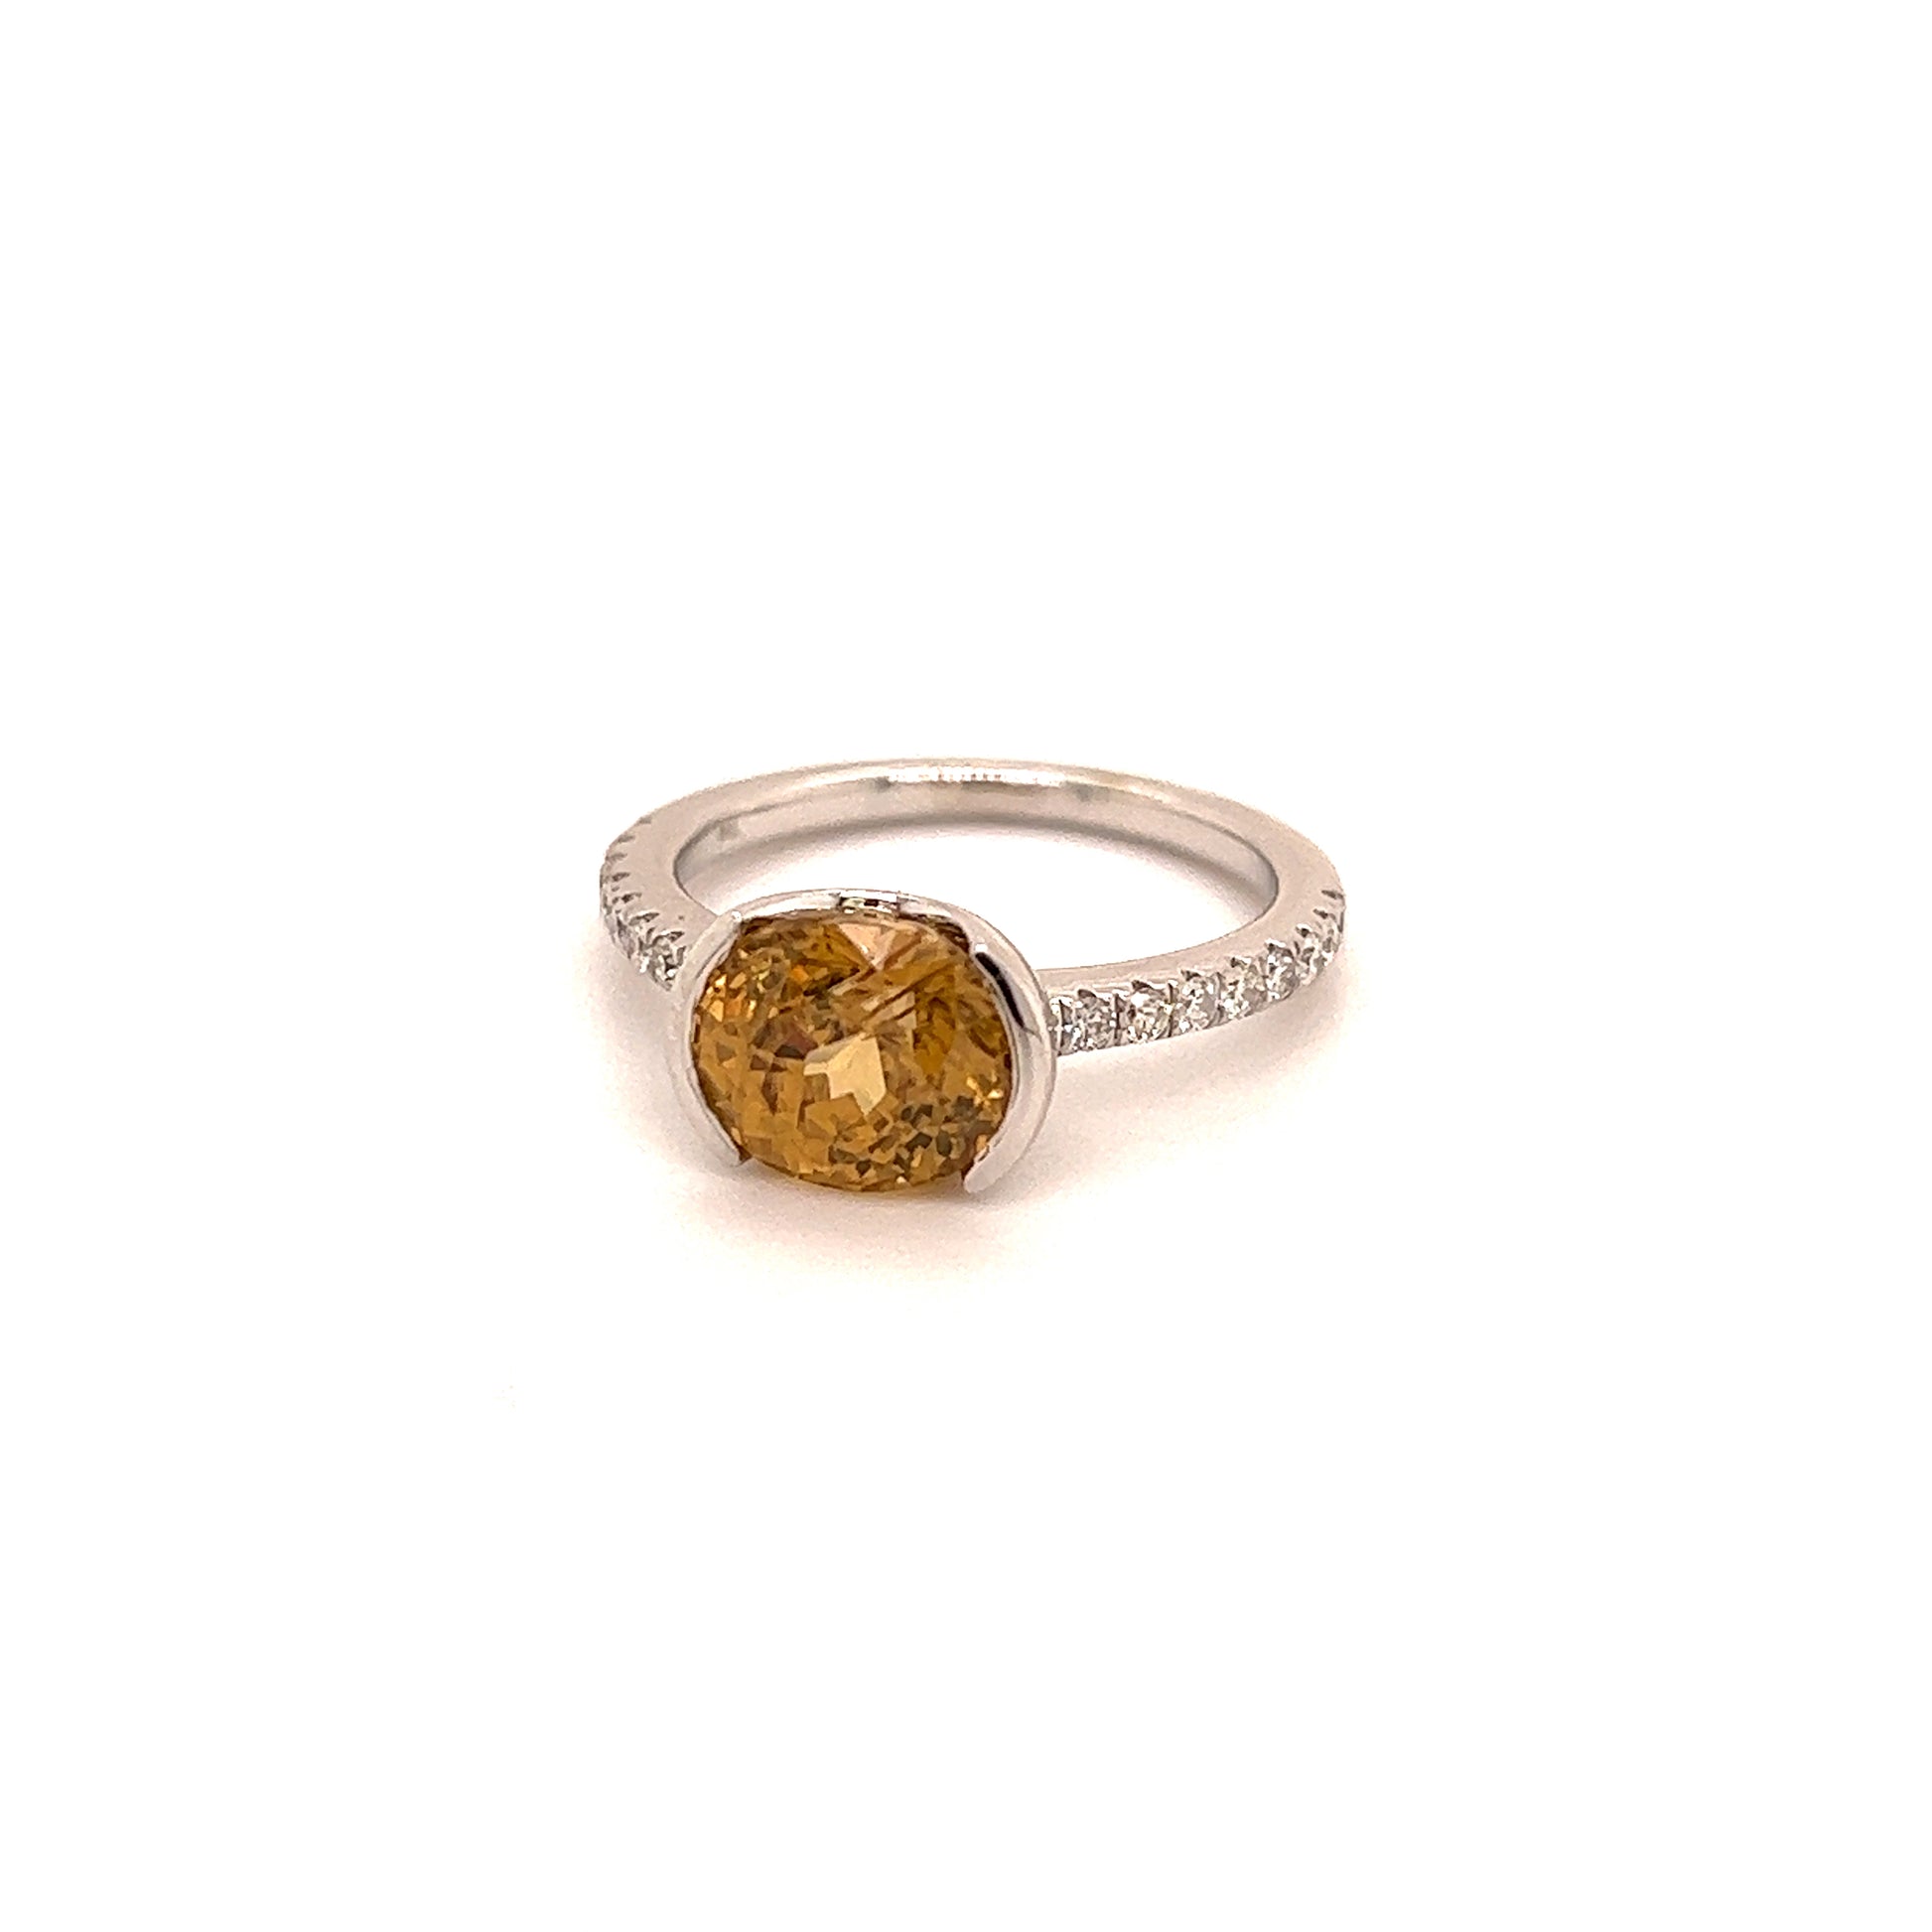 Natural Zircon Diamond Ring 6.5 14k White Gold 3.5 TCW Certified $2,490 221355